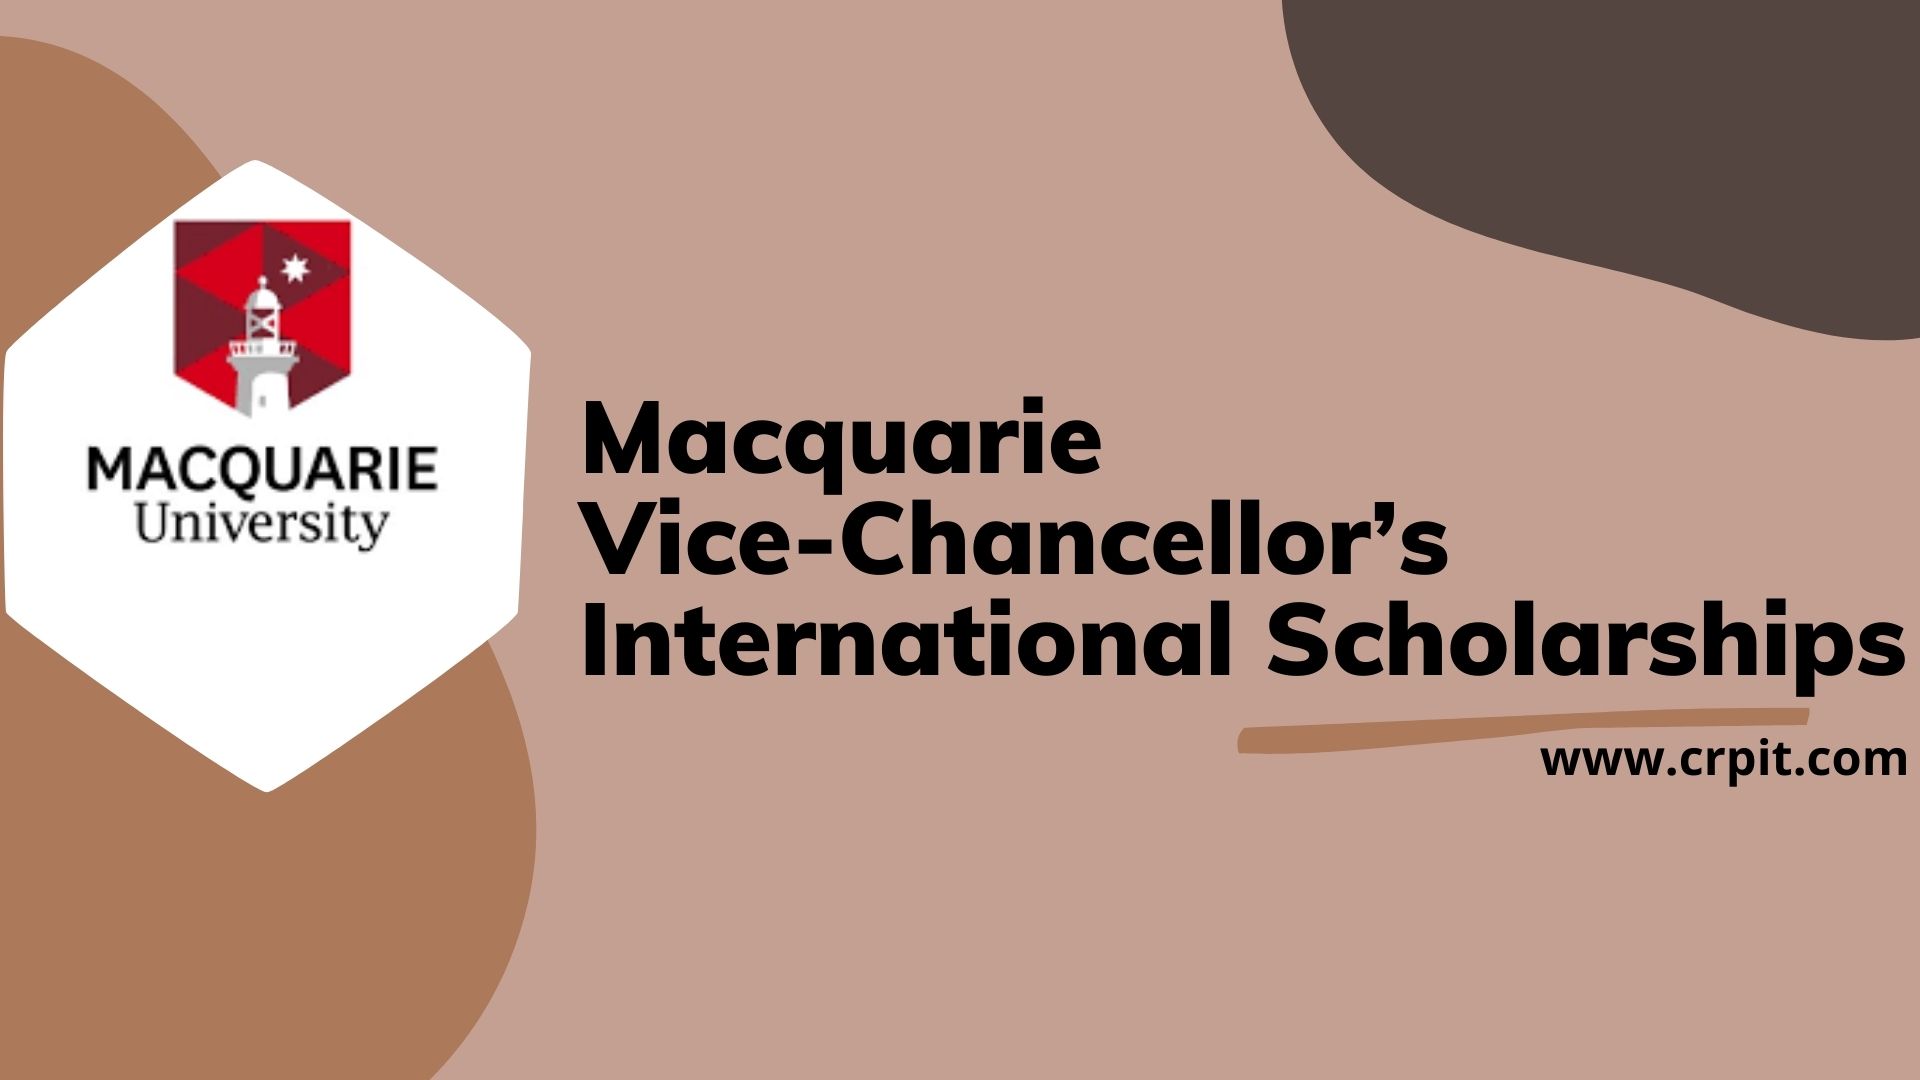 Macquarie Vice-Chancellor’s International Scholarships